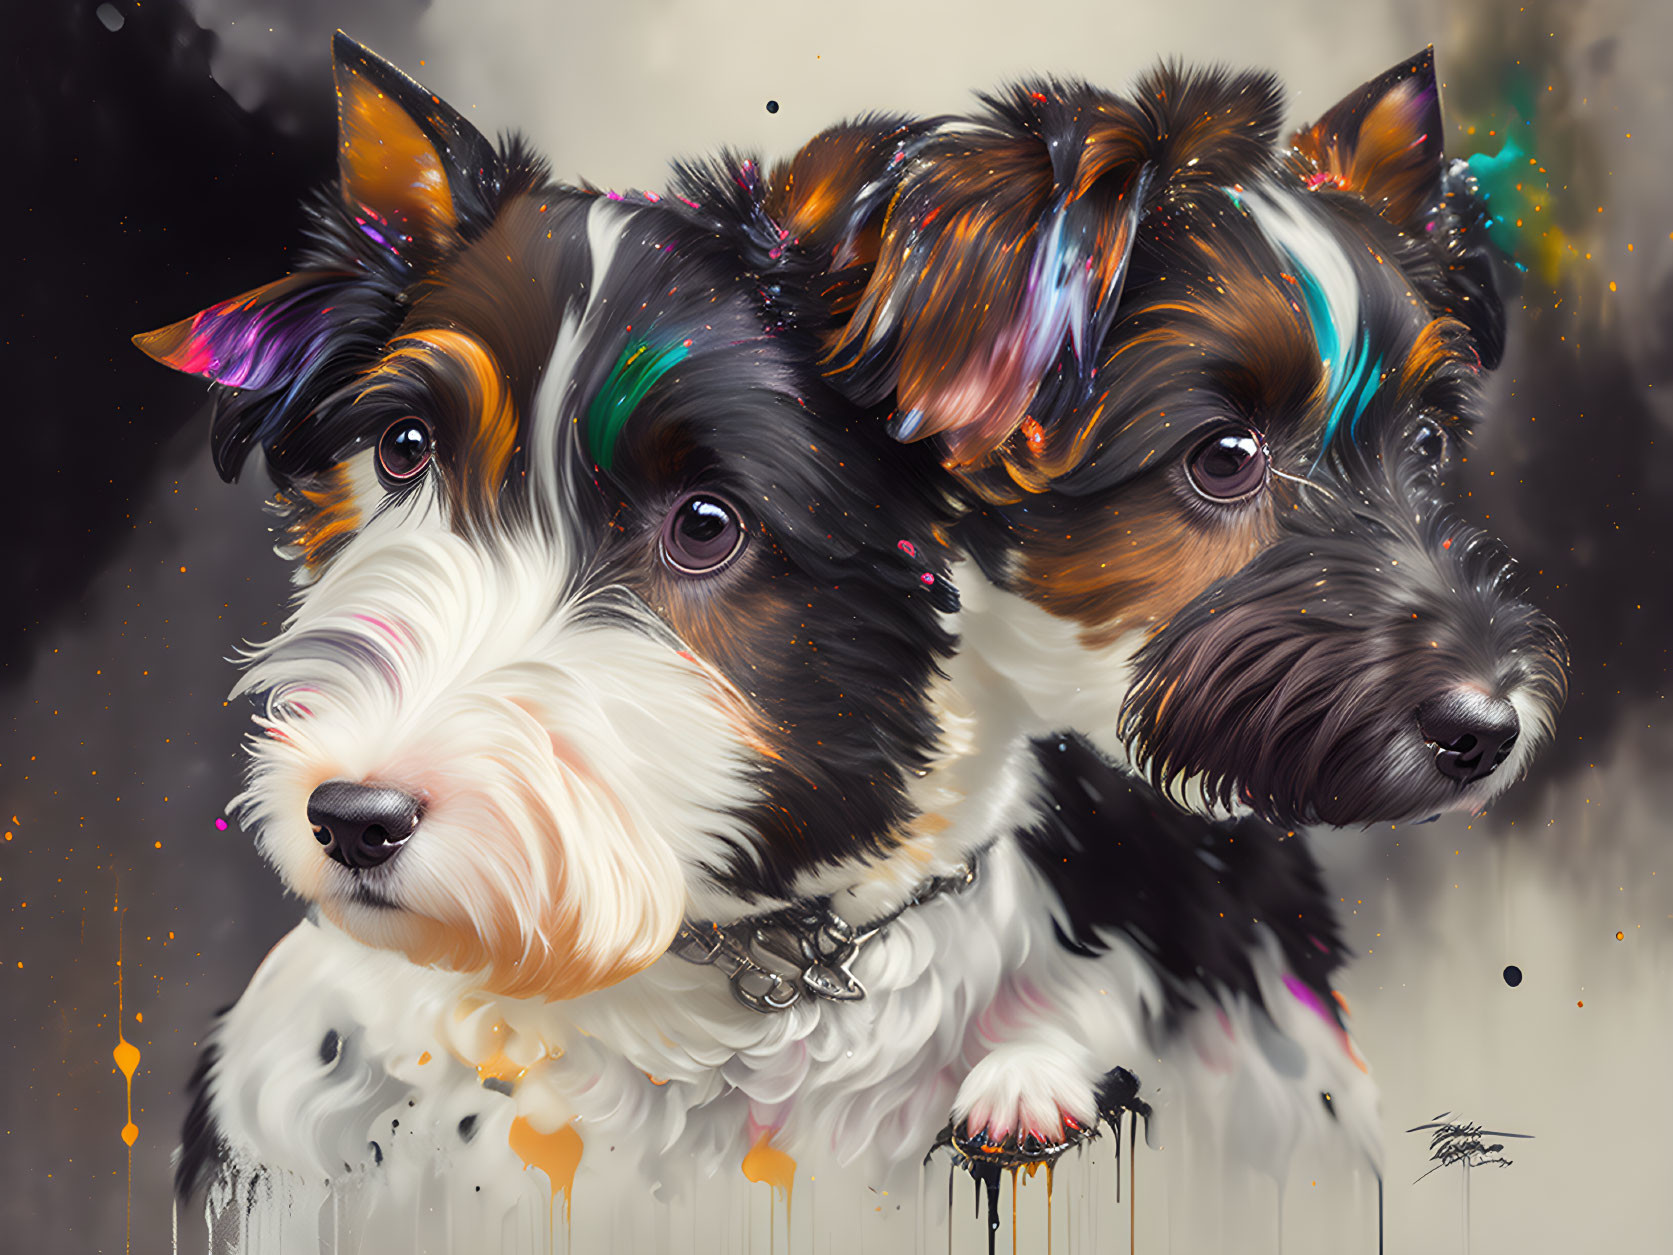 Colorful Surreal Dog Illustrations on Soft Background